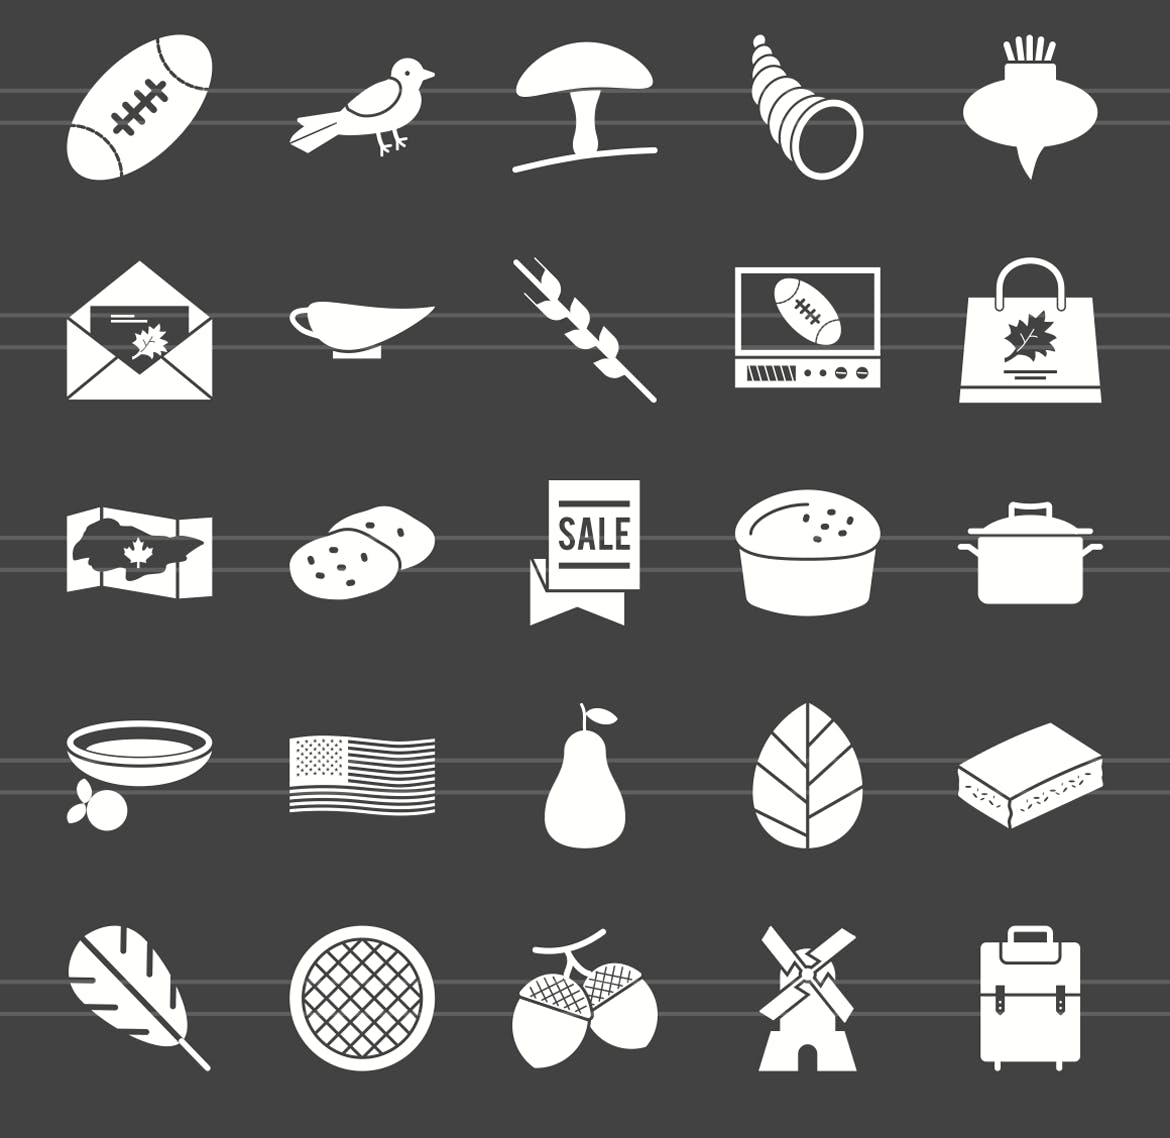 50个感恩节字形反转矢量图标素材 50 Thanksgiving Glyph Inverted Icons插图(2)